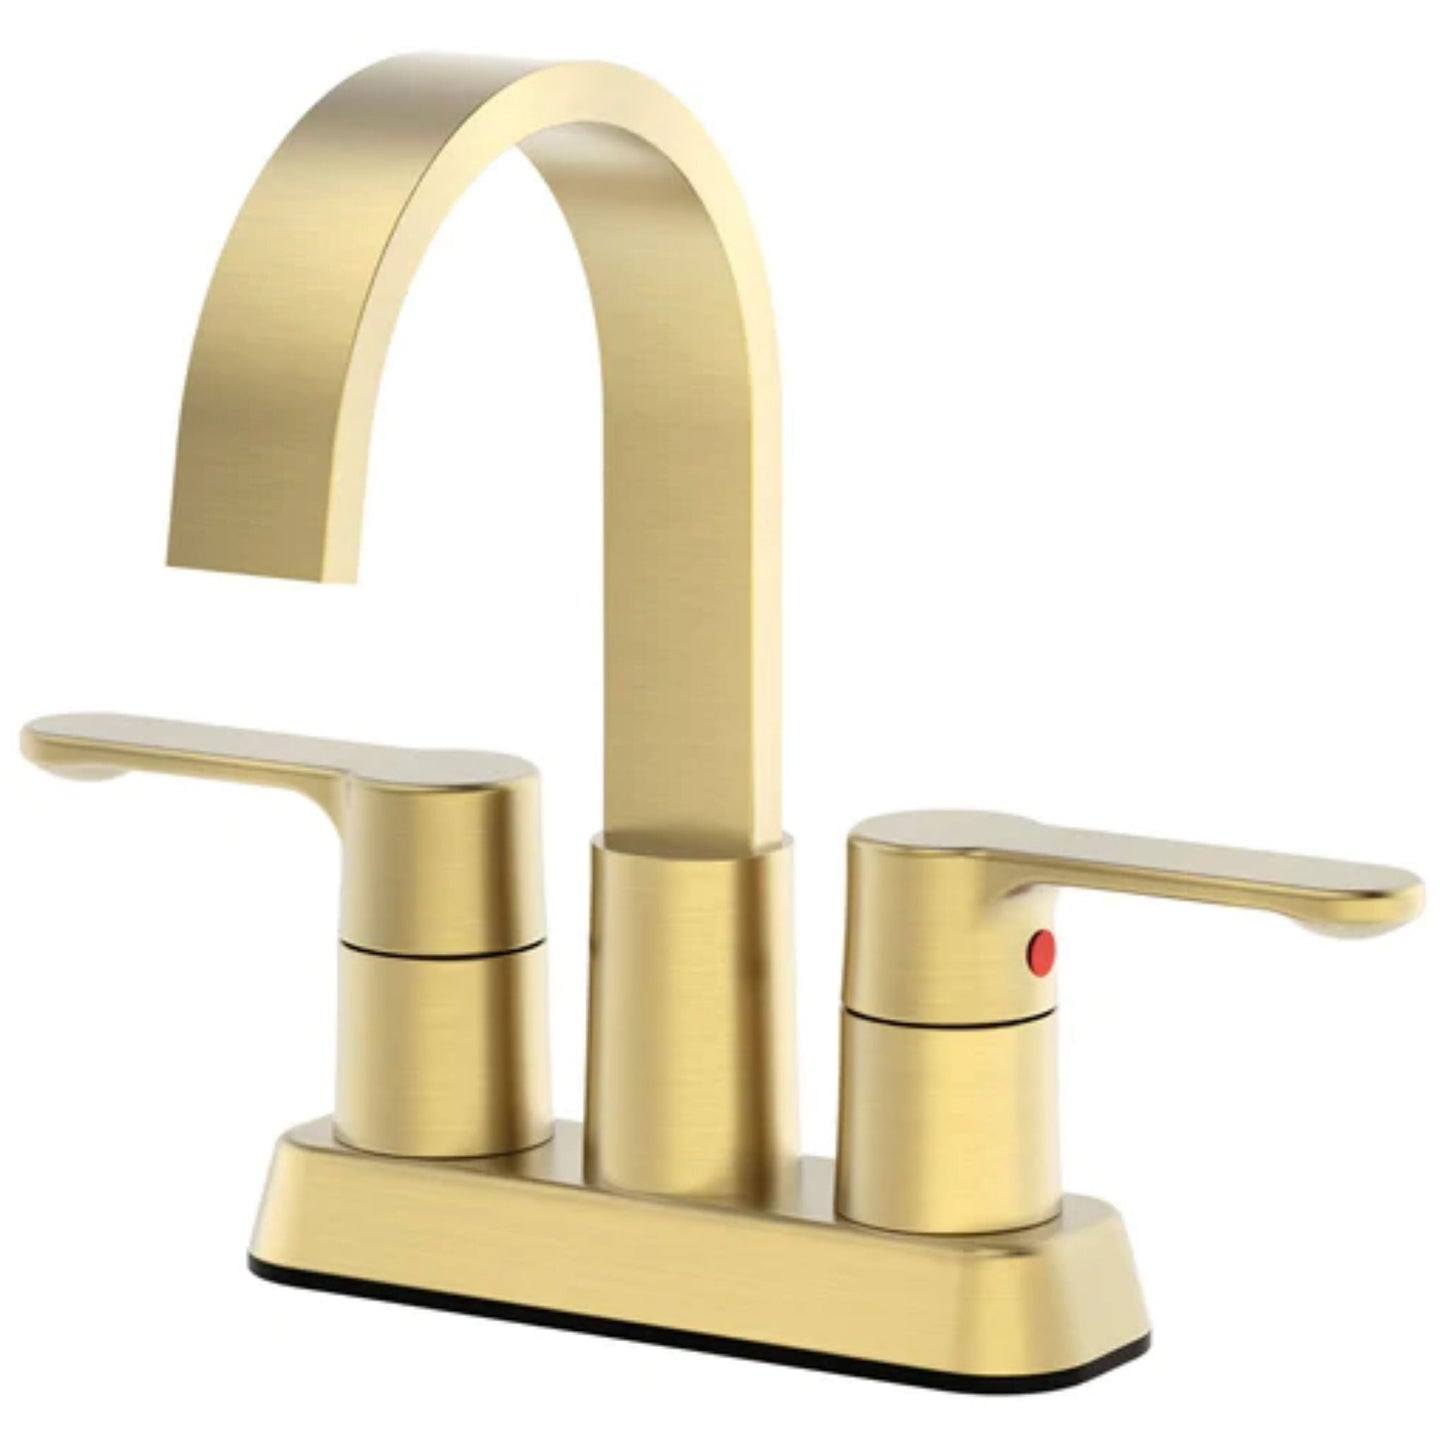 LessCare Gold Modern Bathroom or Bar Faucet - LB23G